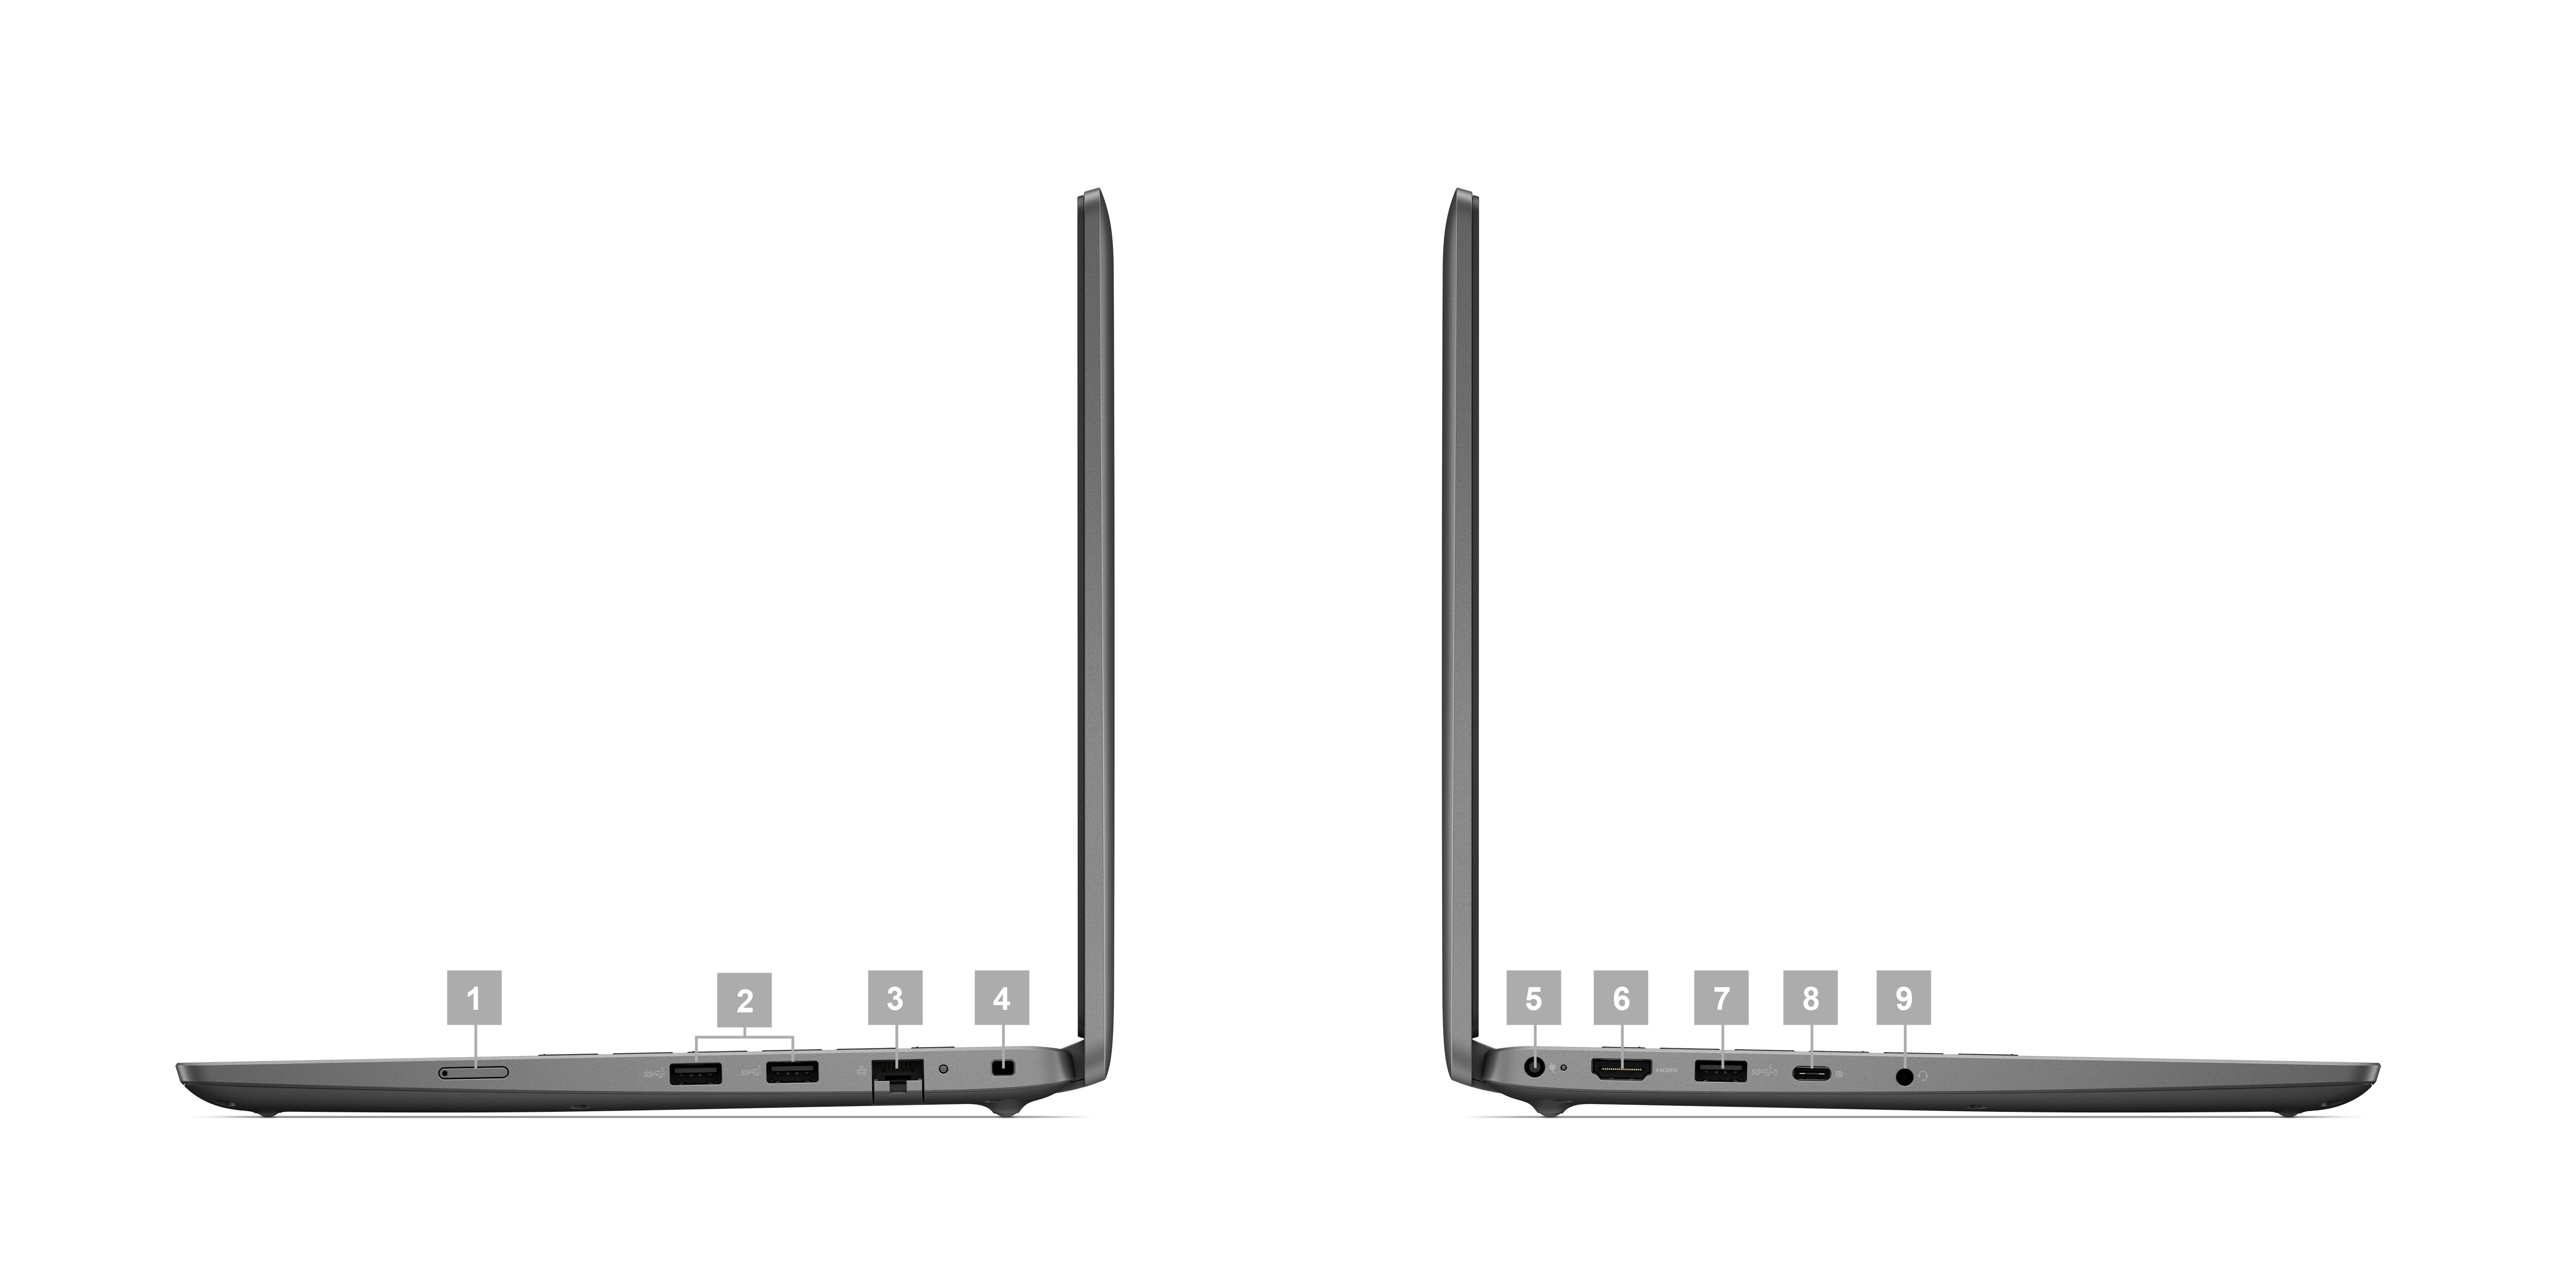 Dell Latitude 3440 노트북에 표시된 제품 포트 및 슬롯을 나타내는 1~9의 숫자